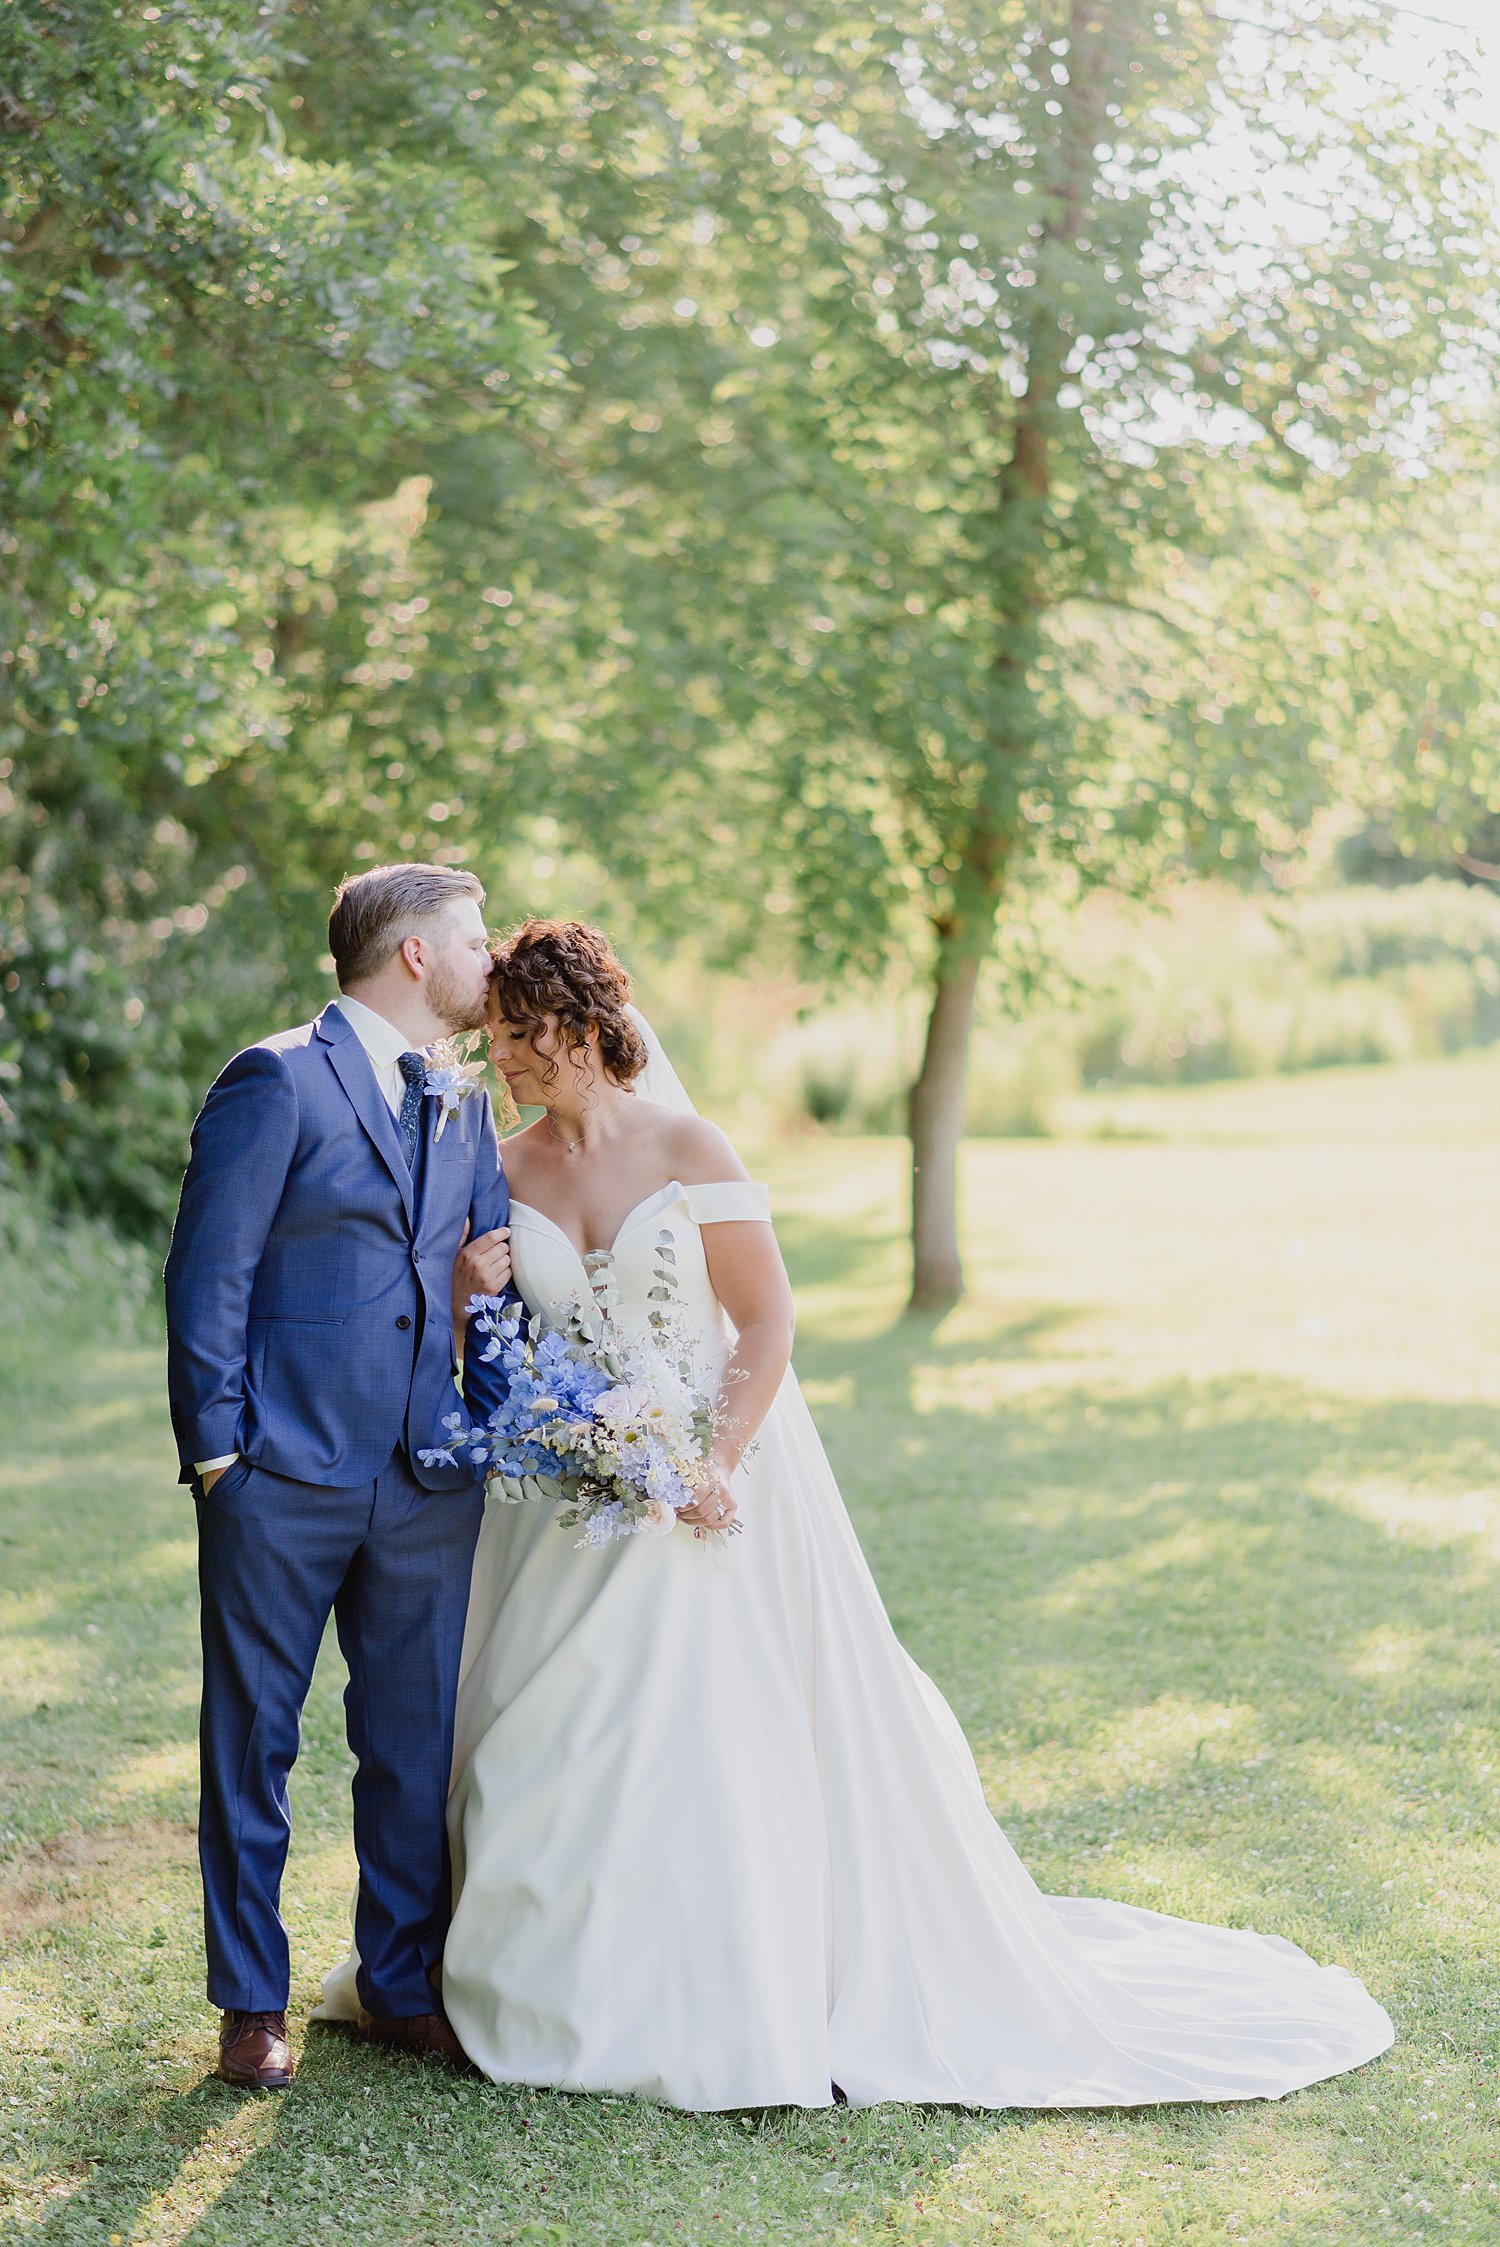 Elegant Summer Backyard Tented Wedding in Sydenham, Ontario | Prince Edward County Wedding Photographer | Holly McMurter Photographs_0063.jpg